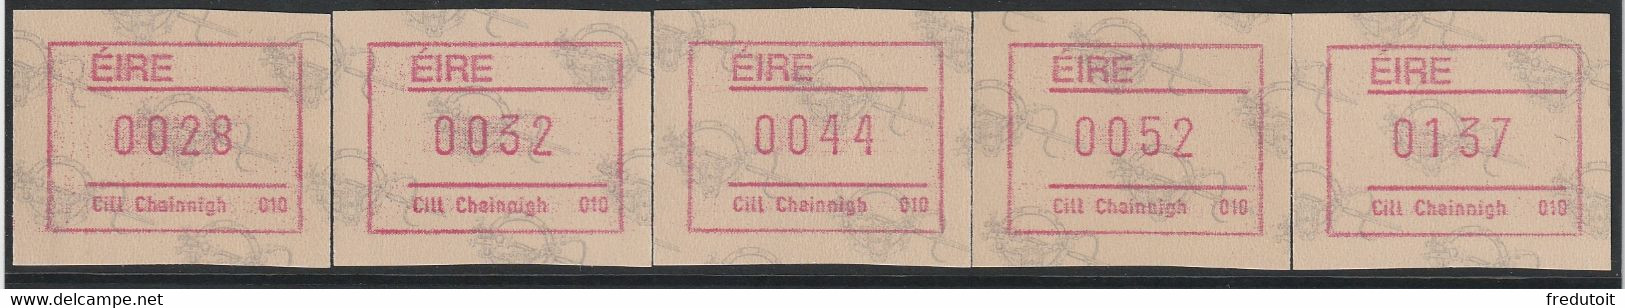 IRLANDE - Timbres Distributeurs / FRAMA  ATM - N°4** (1992) Cill Chainnigh 010 - Vignettes D'affranchissement (Frama)